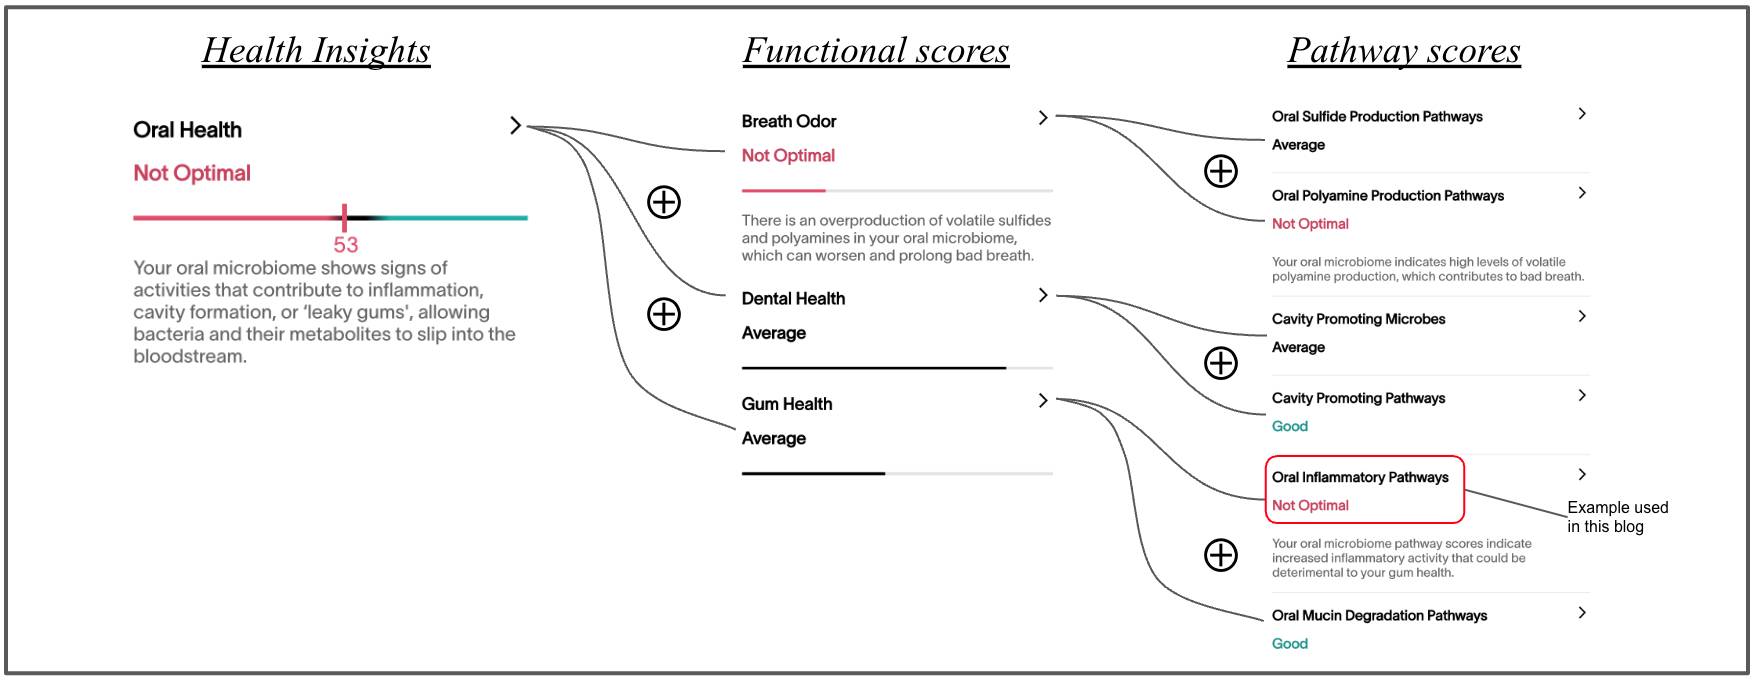 Health functional pathway scores